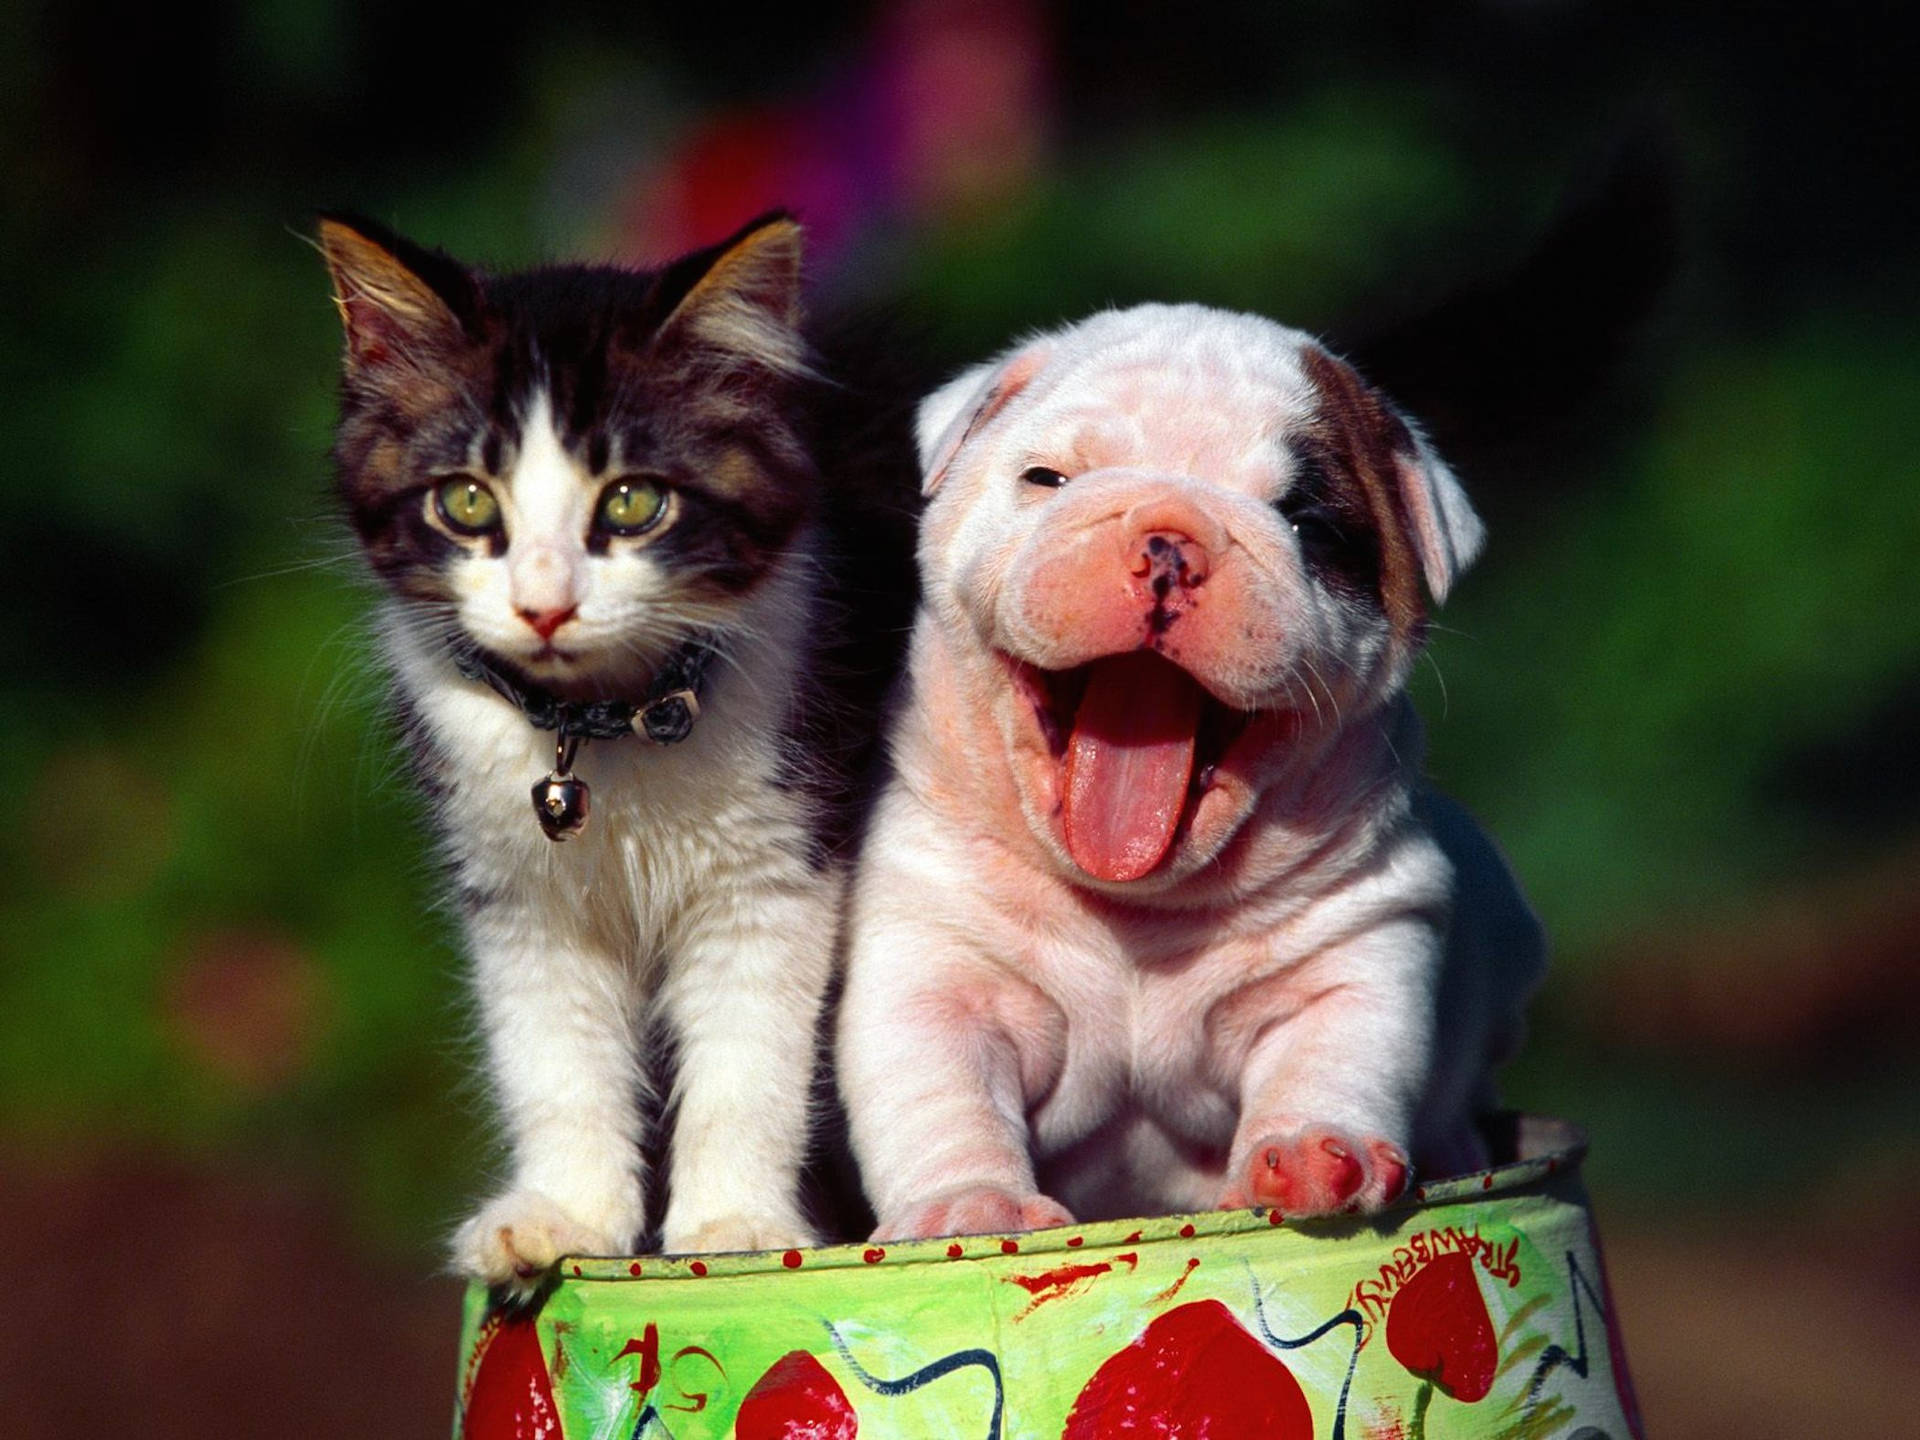 Caption: "Cheerful Cat and Dog Showcasing Harmony" Wallpaper